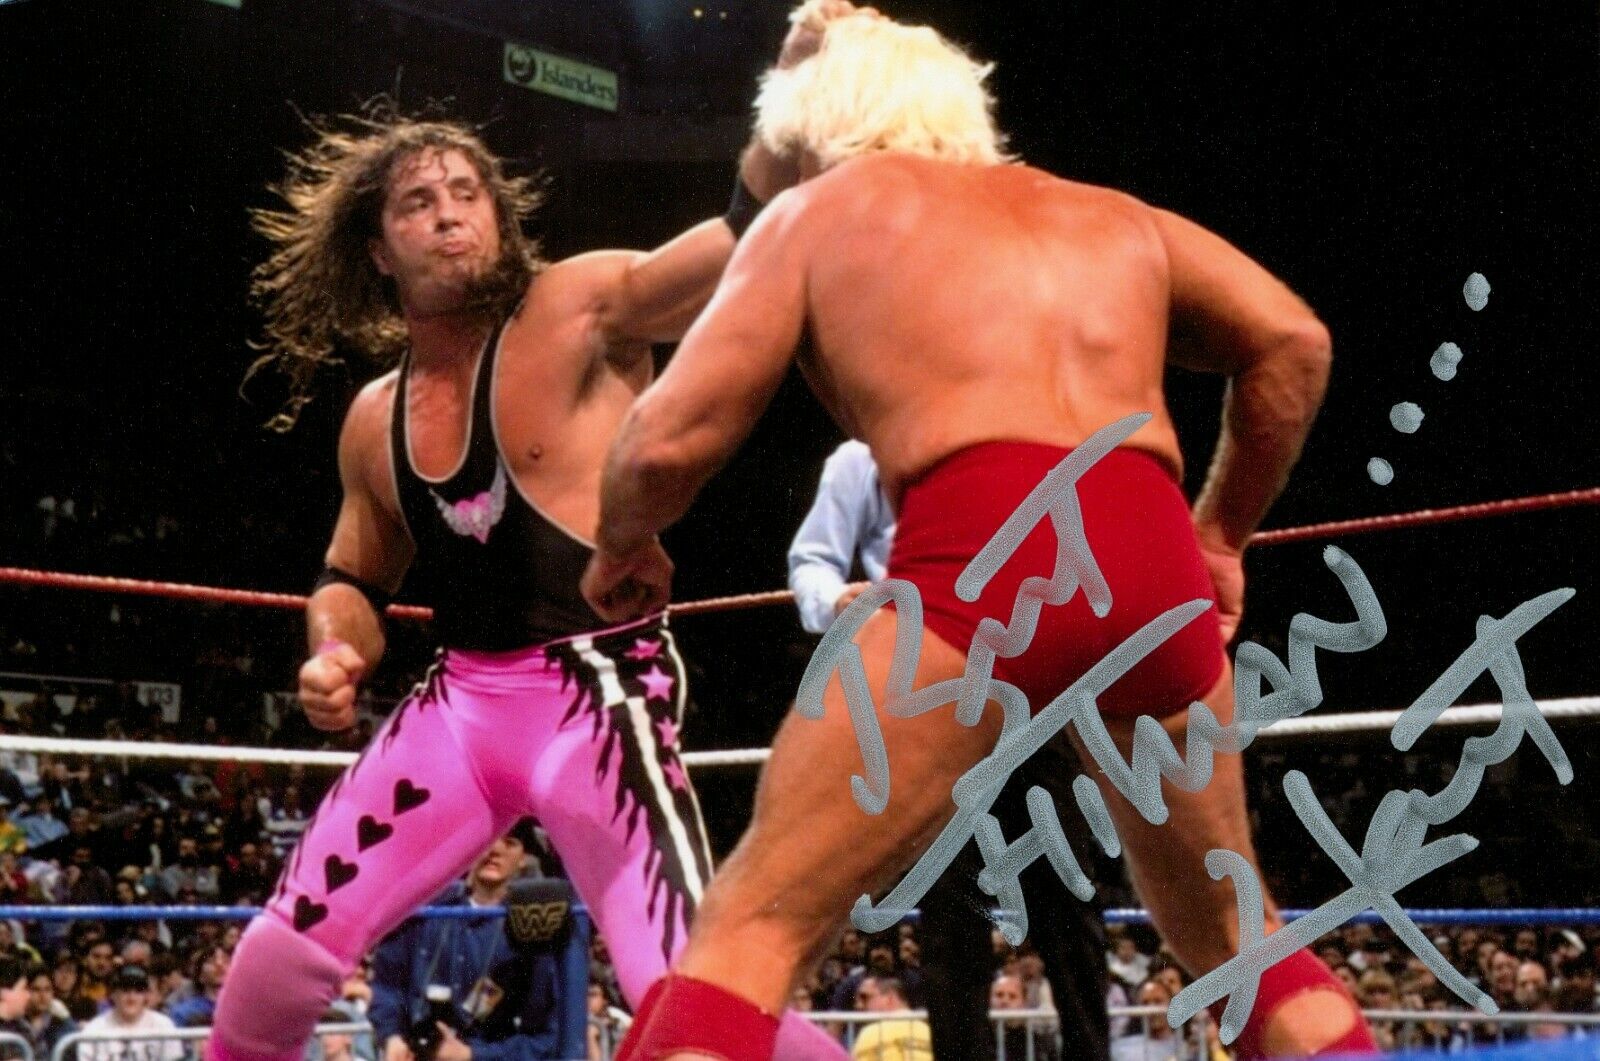 Bret 'Hitman' Hart Signed 6x4 Photo Poster painting WWF WWE Royal Rumble Wrestler Autograph +COA